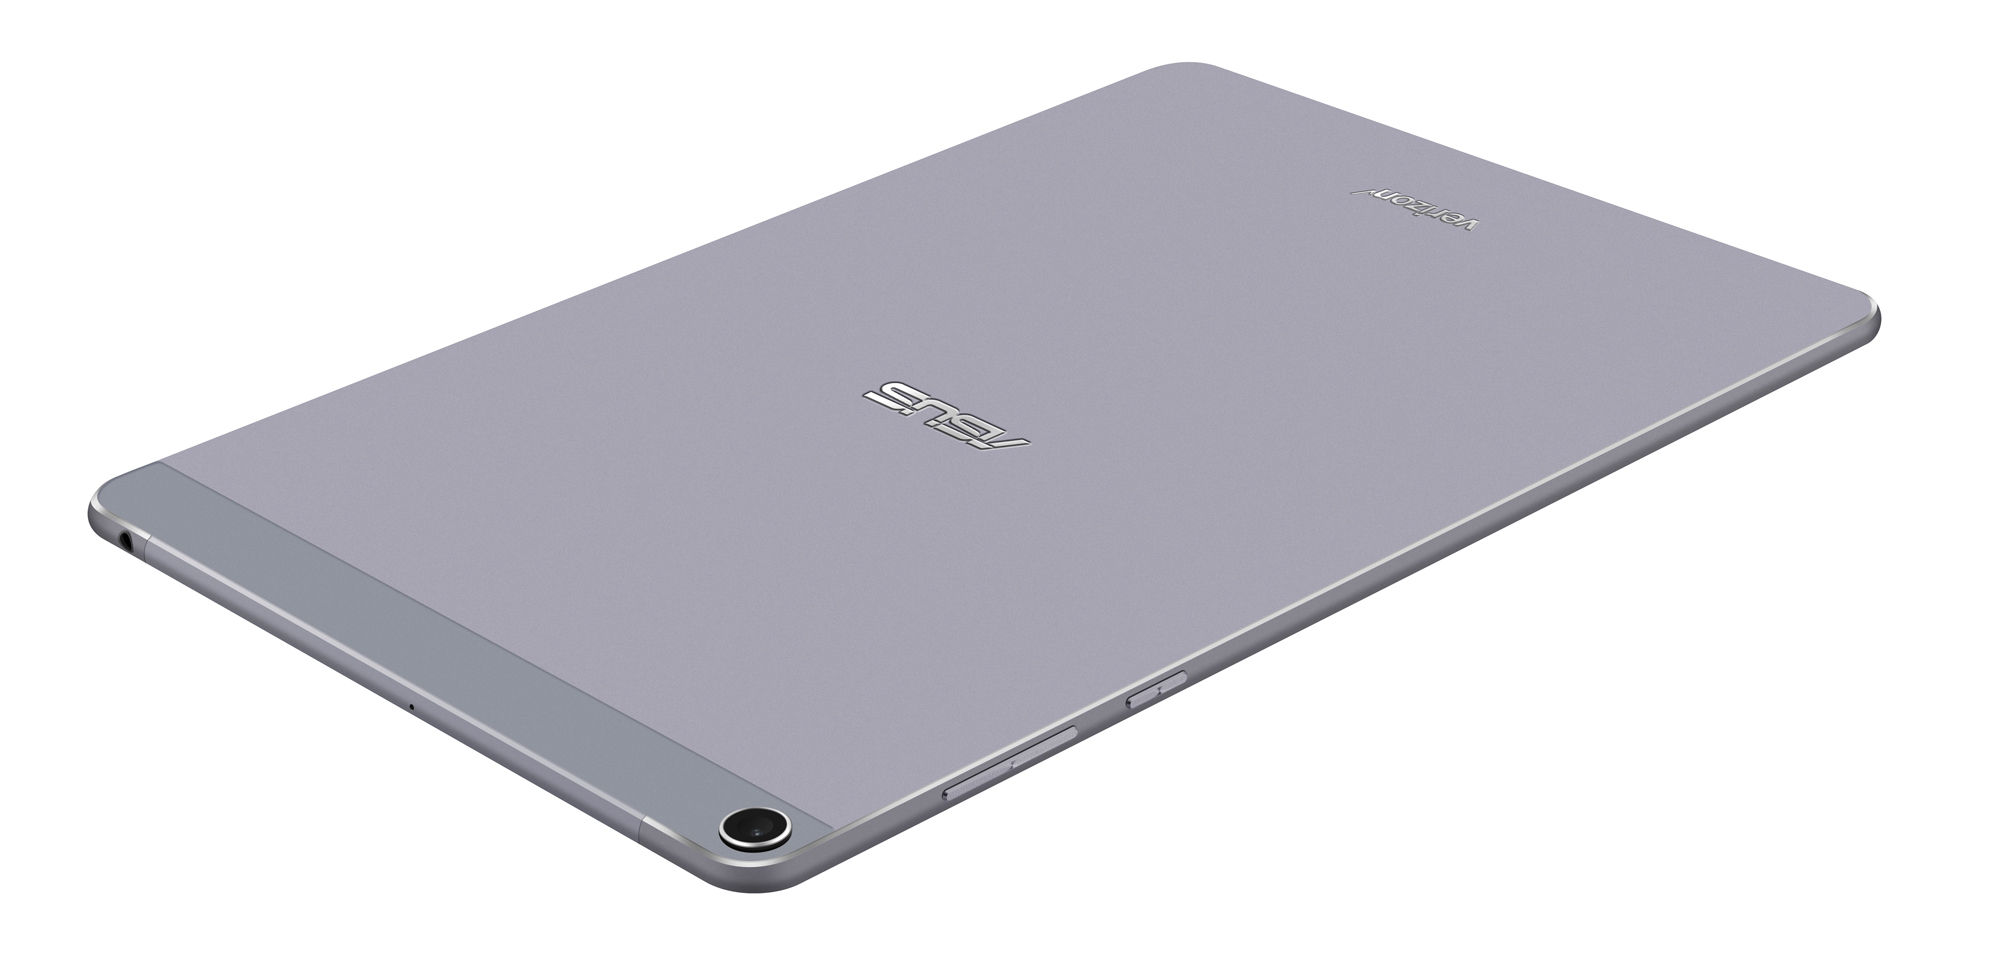 ASUS ZenPad™ Z10 tablet